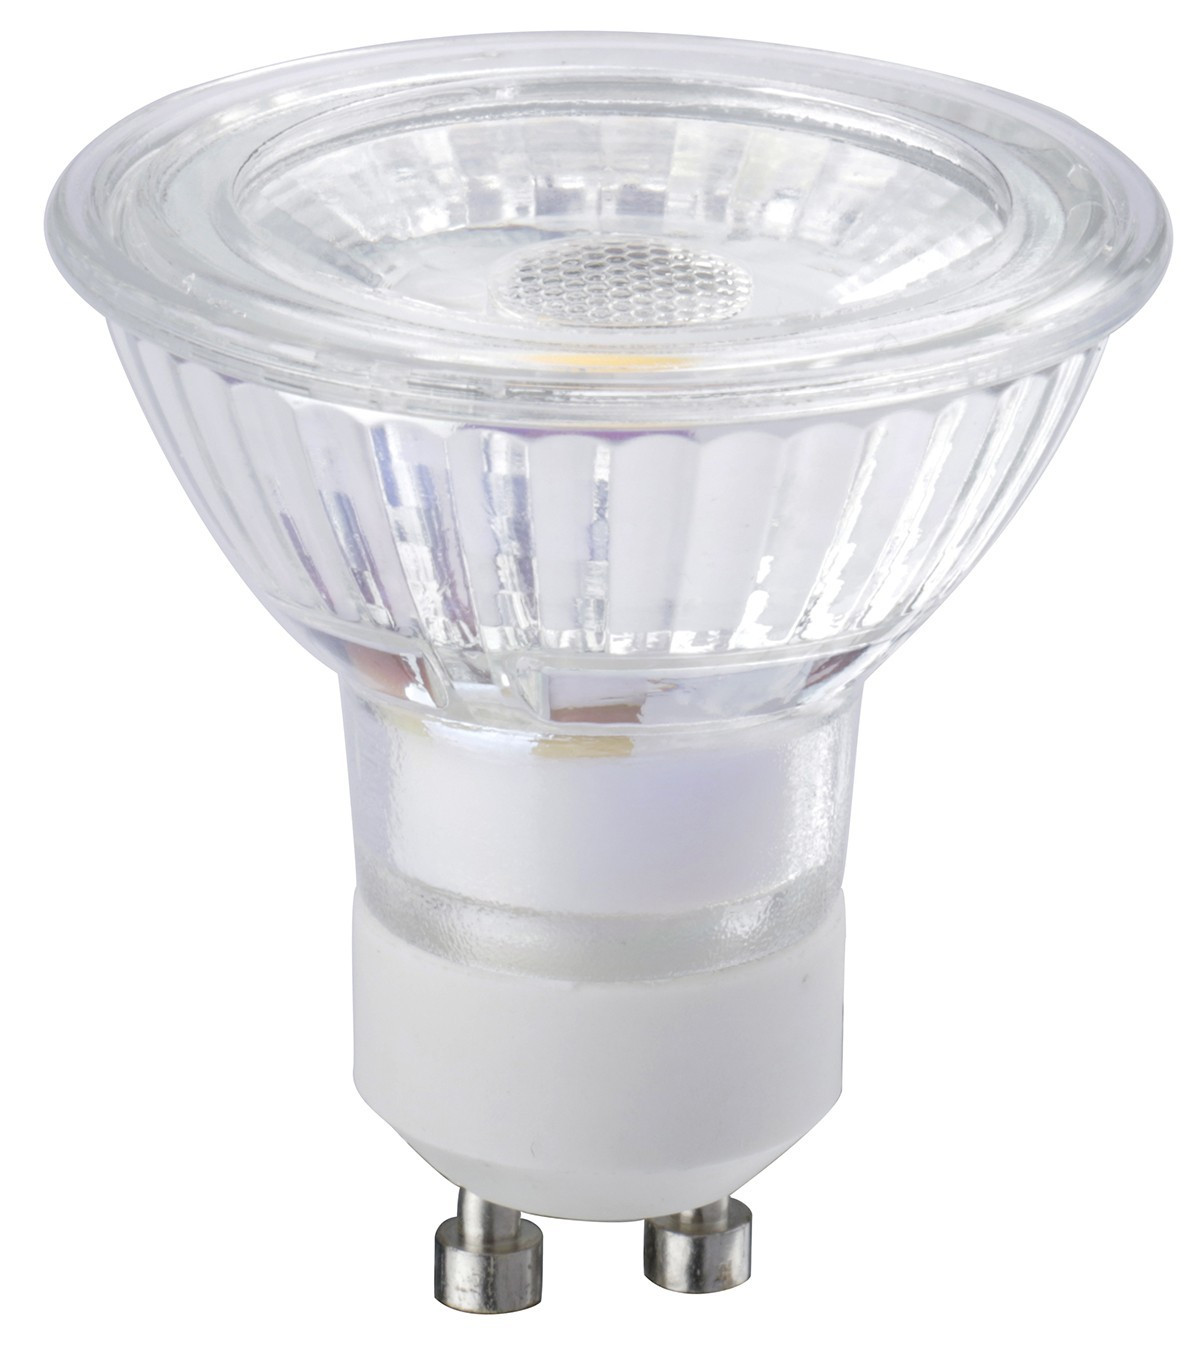 LANDLITE LED-GU10-5W/COB warmwhite(2700K), LED lamp - Welcom